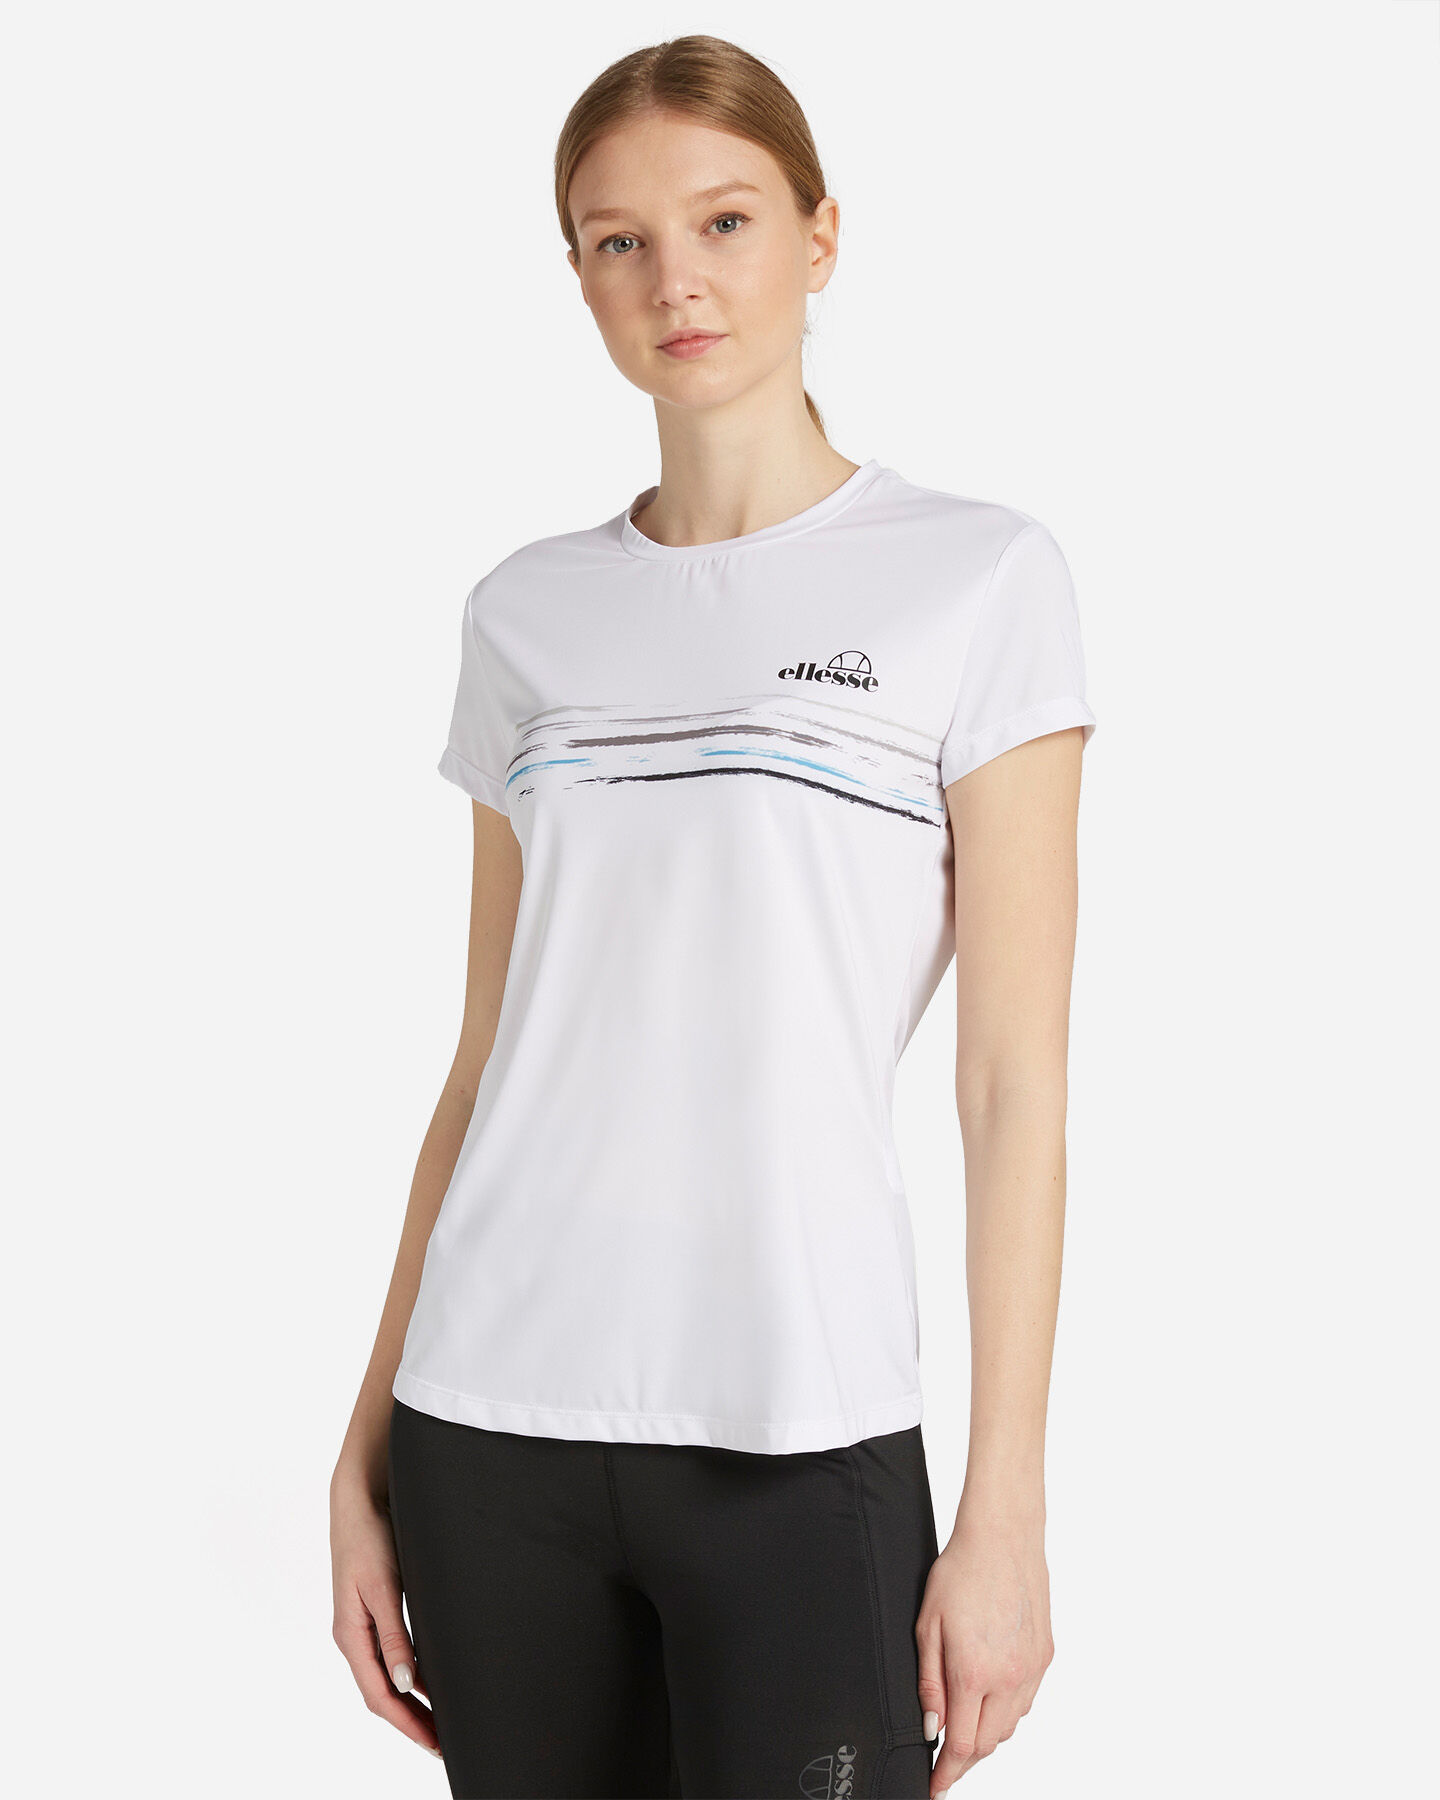  T-Shirt tennis ELLESSE FIVE STRIPES W S4117584|001|M scatto 0